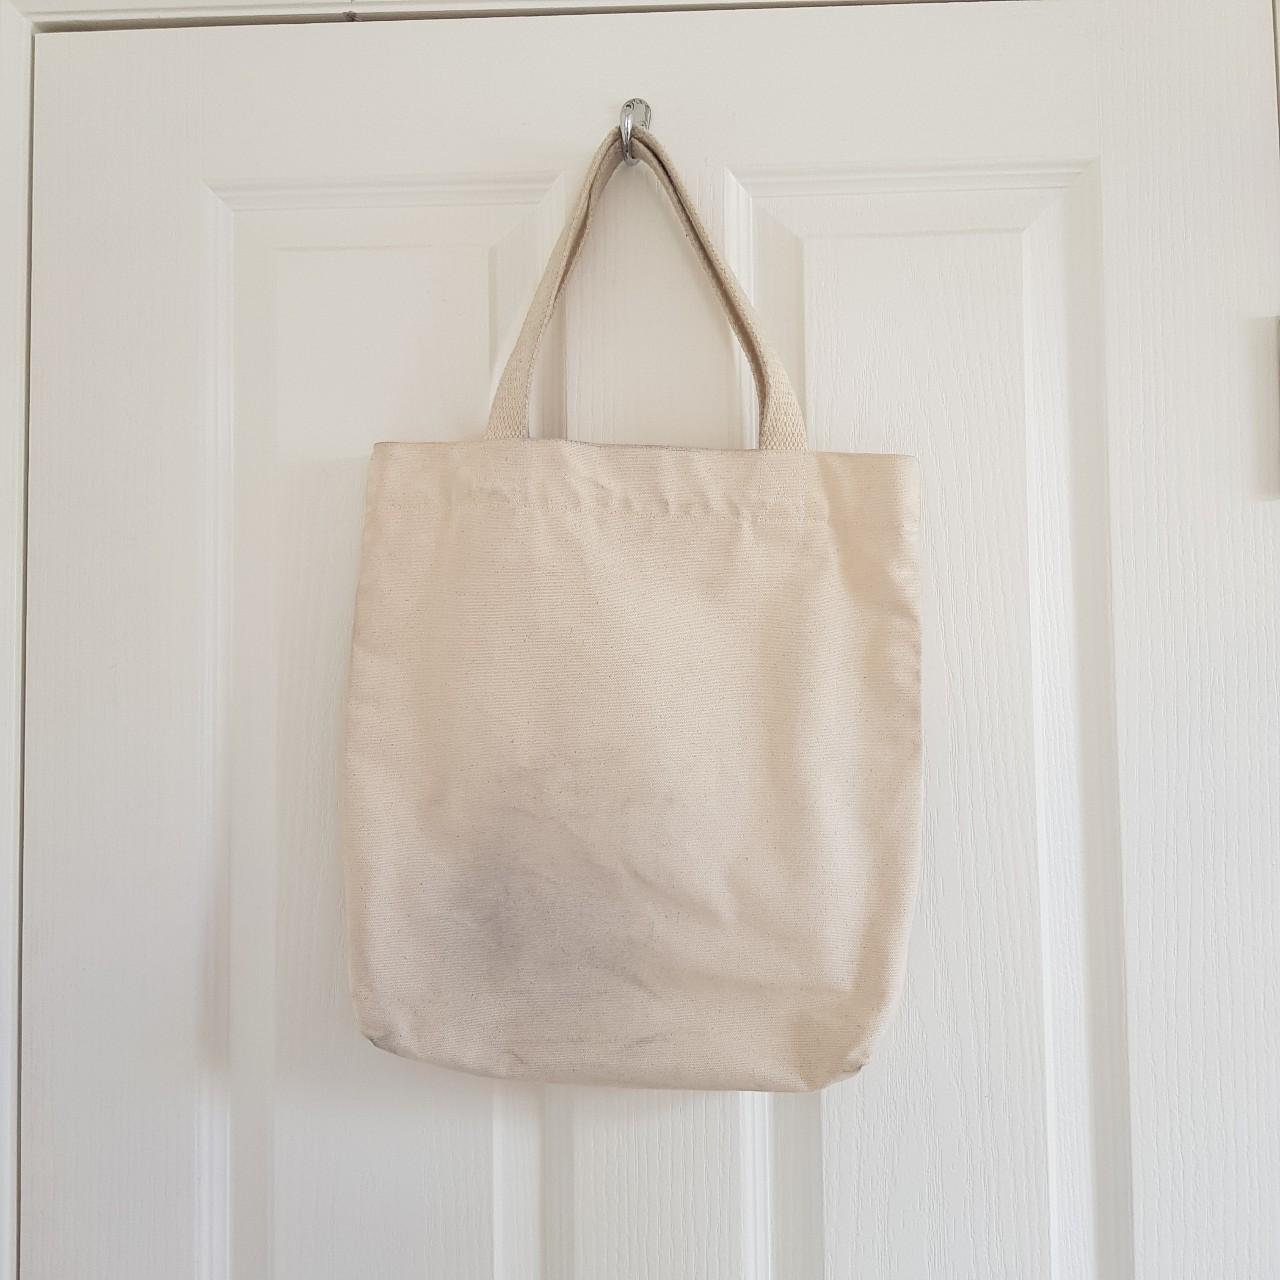 Product Image 2 - White/beige Muji Tote Bag. High